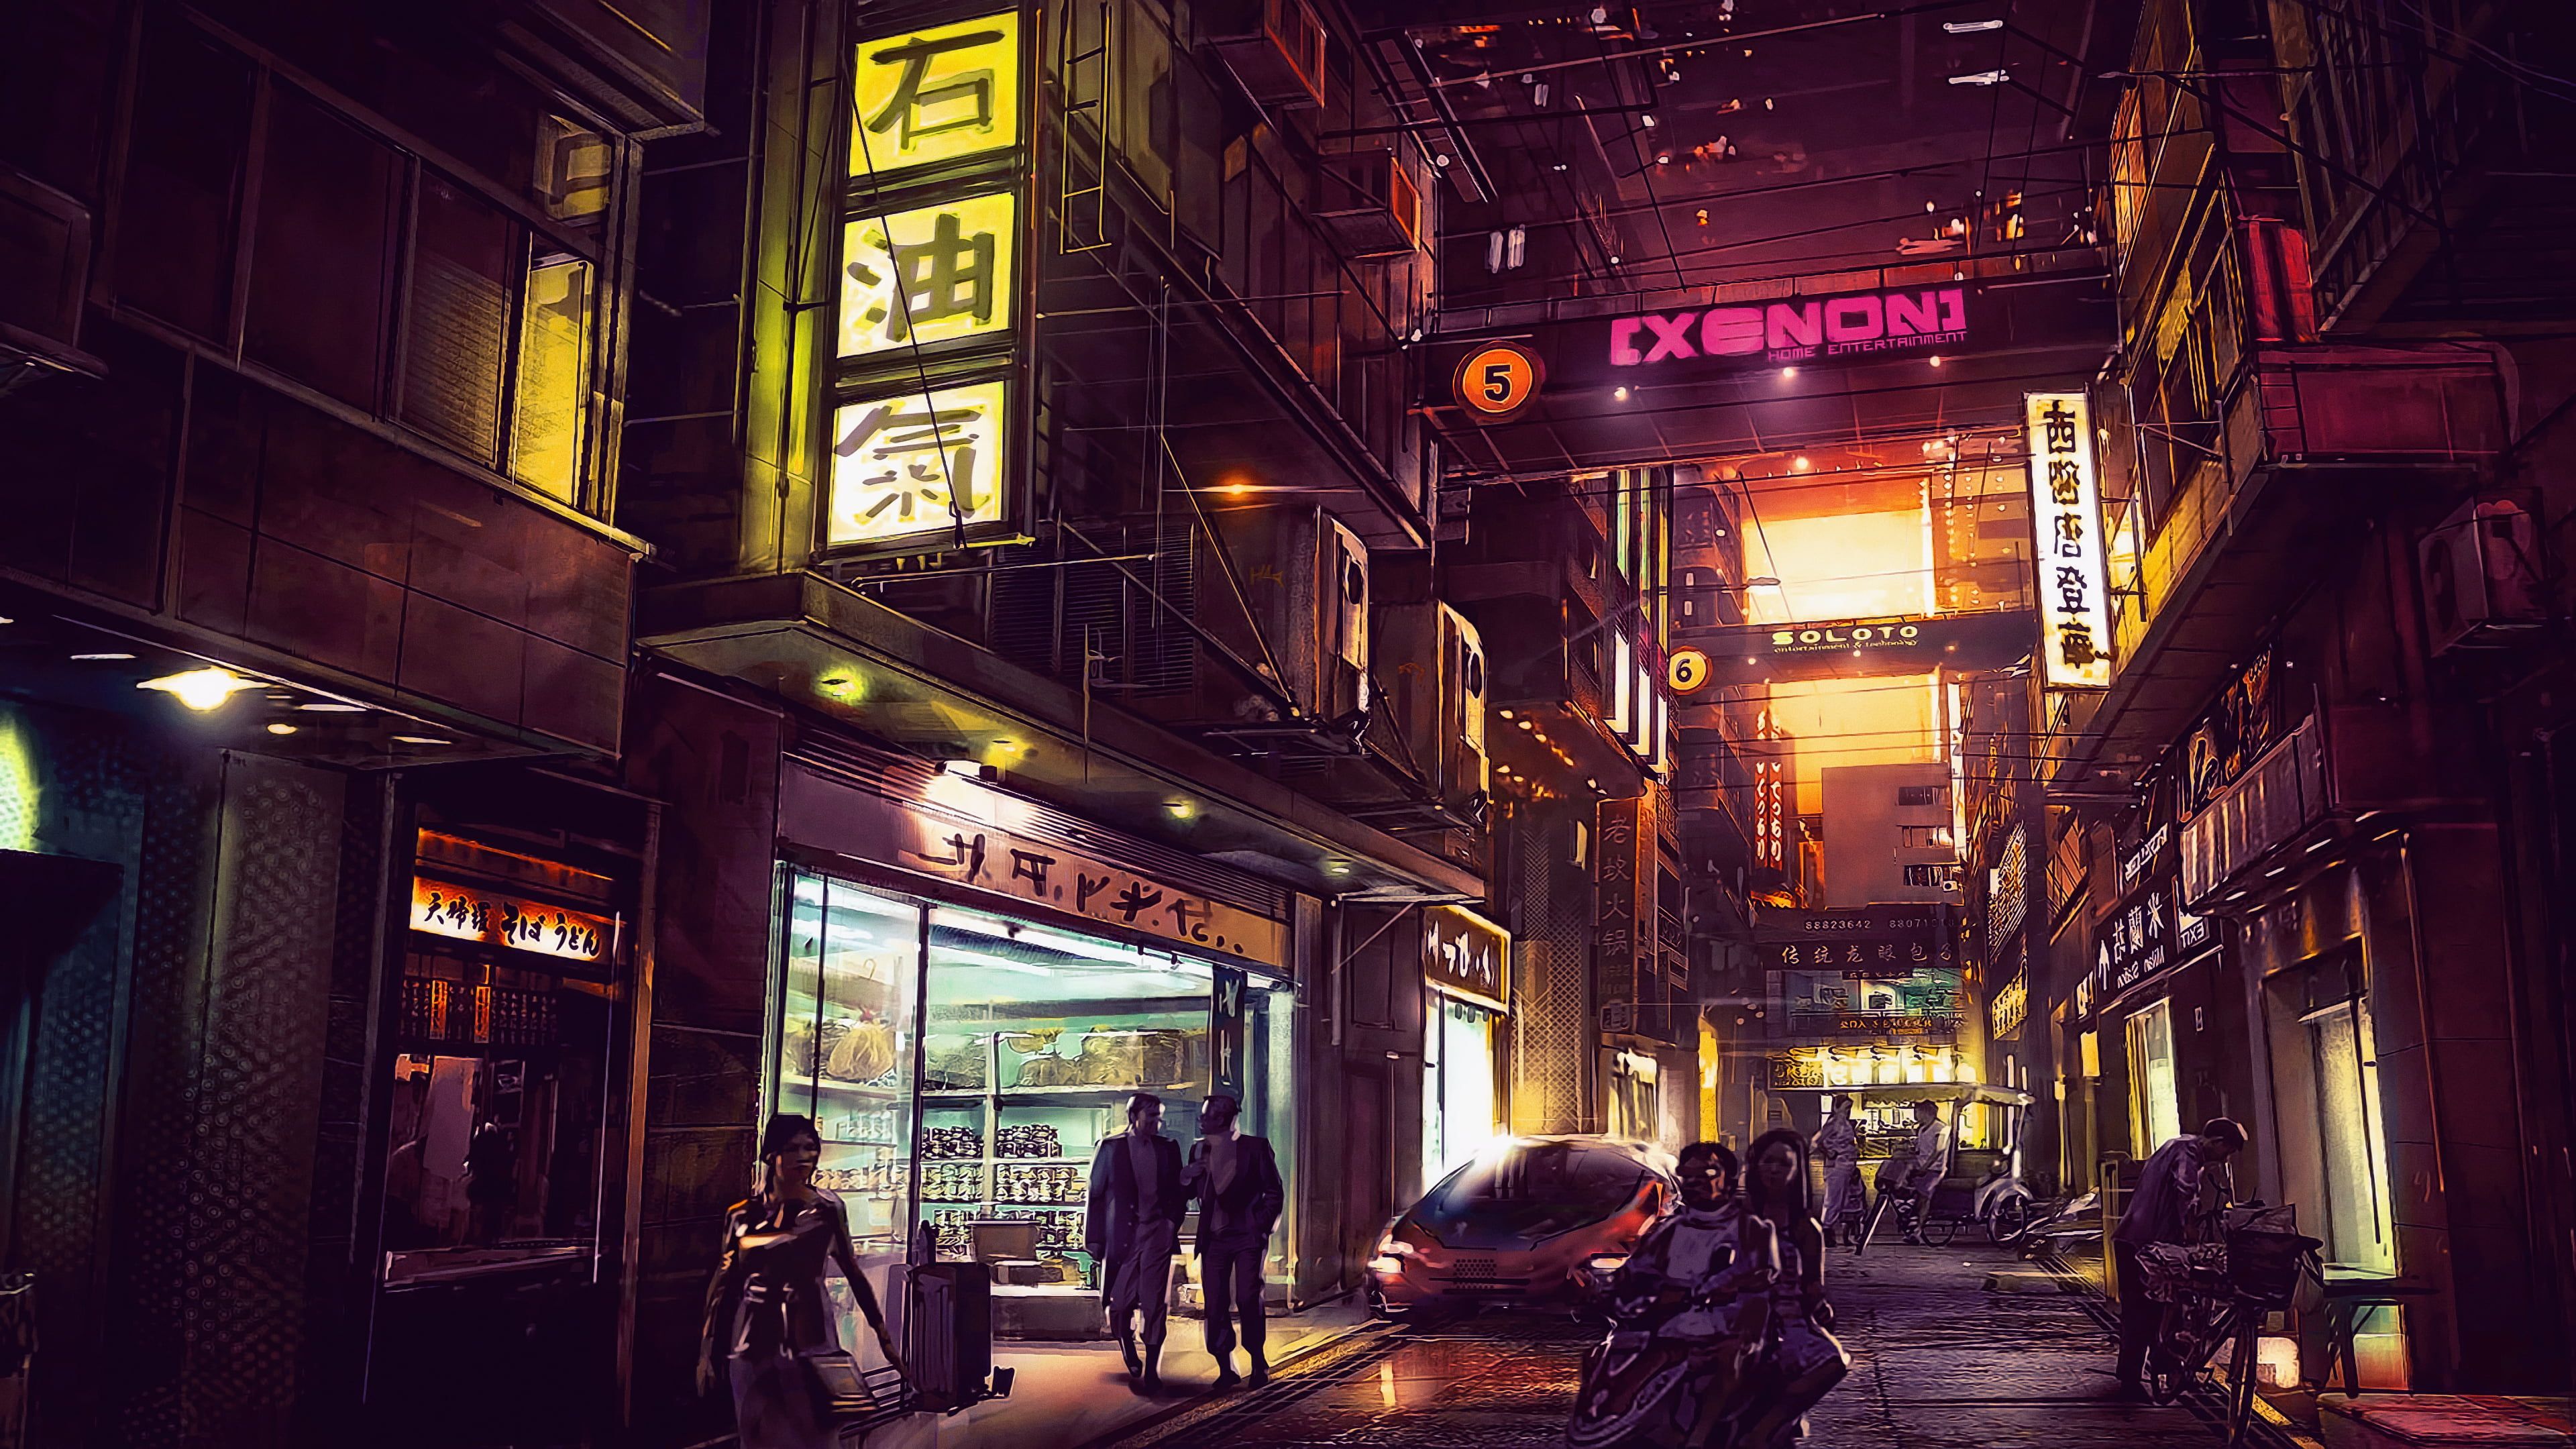 Exenon1 digital wallpaper #night #artwork futuristic city #cyberpunk #cyber cyber city science fiction digital art. Futuristic city, Digital wallpaper, Cyberpunk